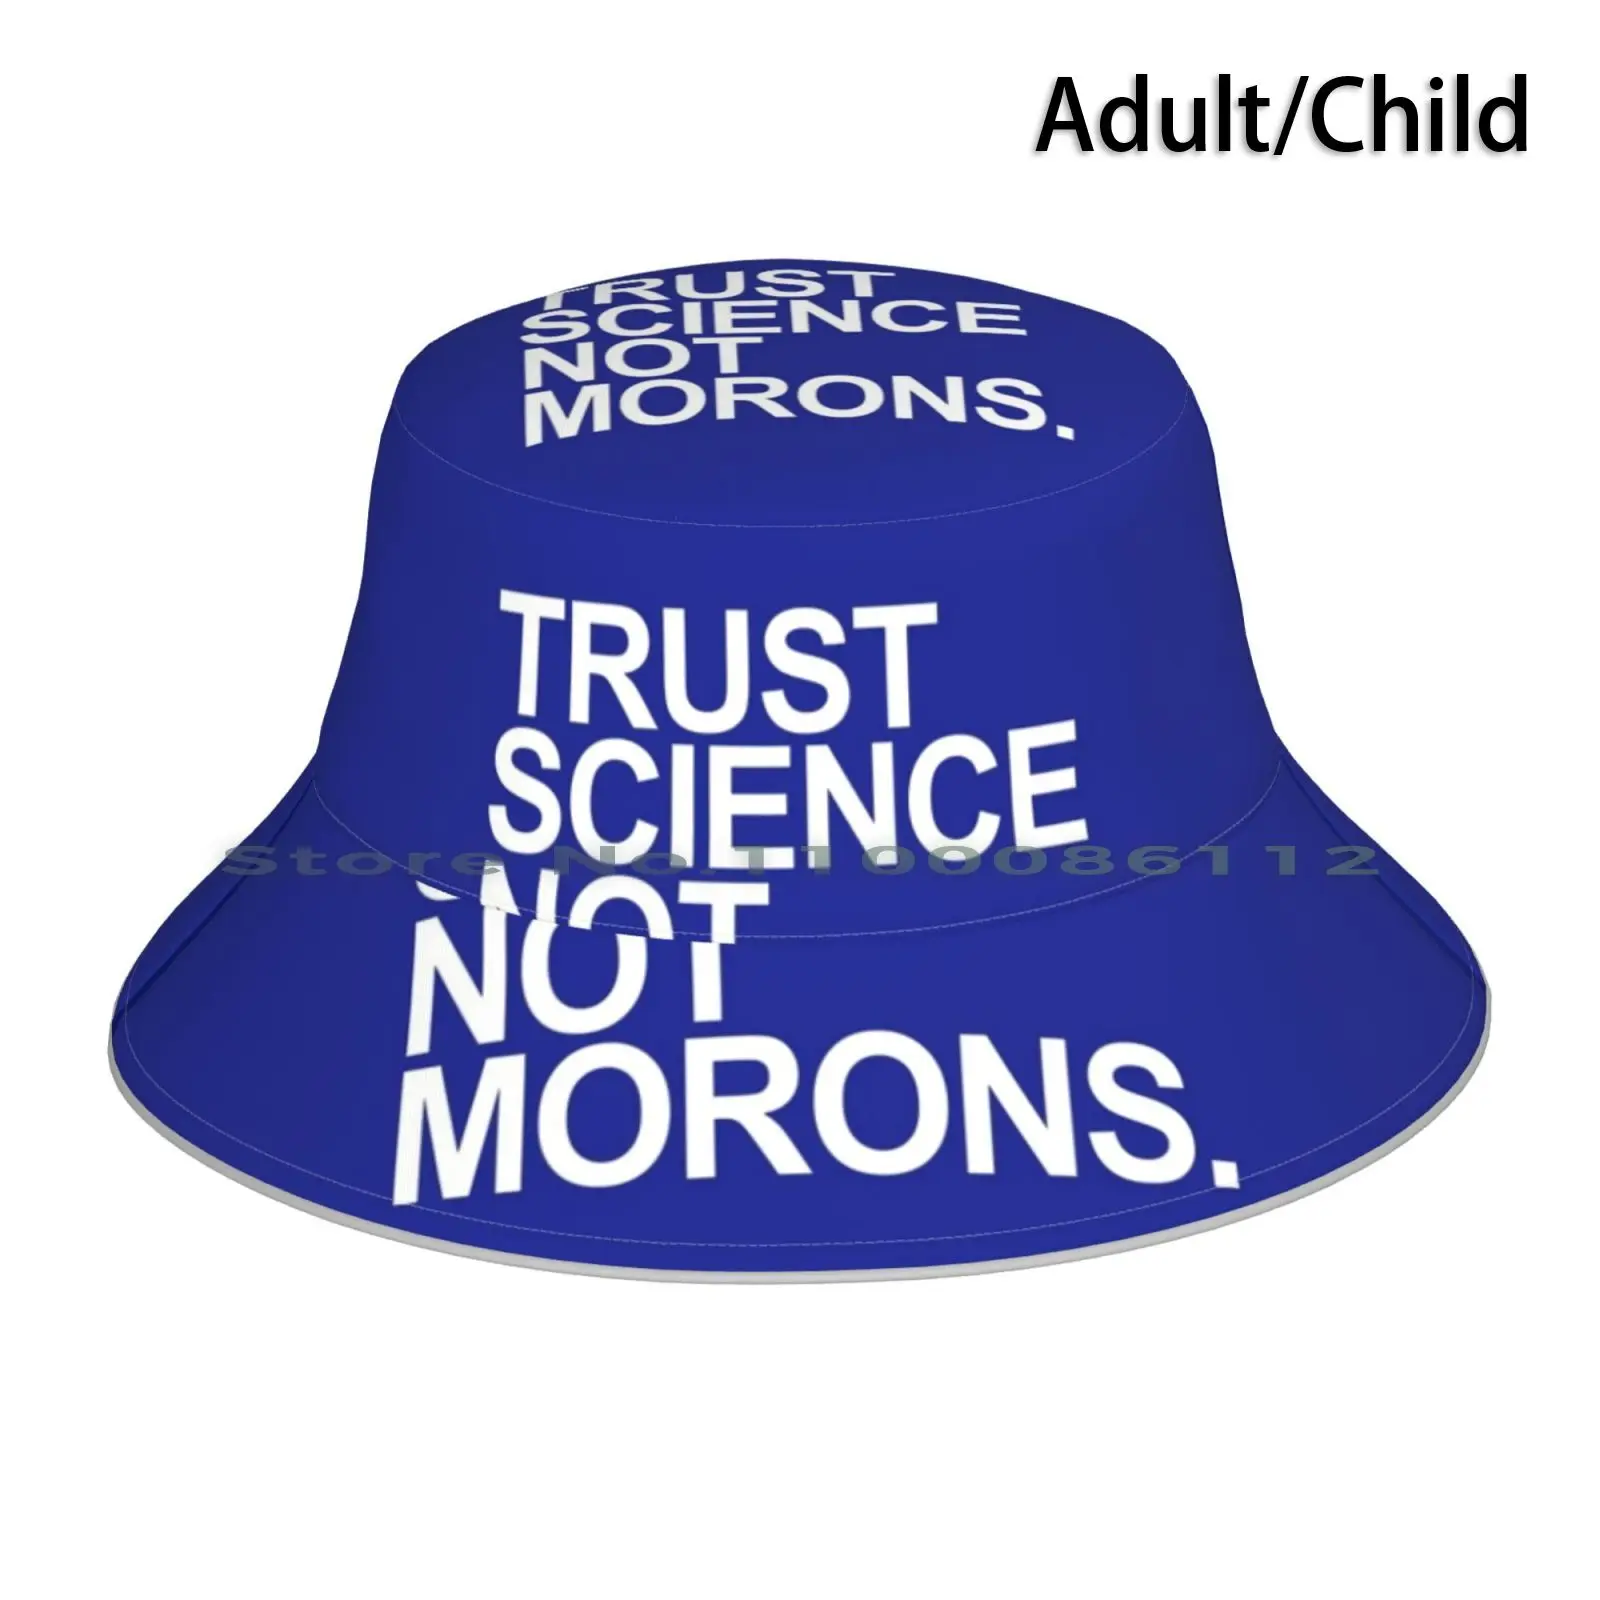 

Trust Science Not Morons ( Blue ) Bucket Hat Sun Cap Trust Science Not Morons 19 Anti Trump Idiot Plandemic In Fauci We Trust